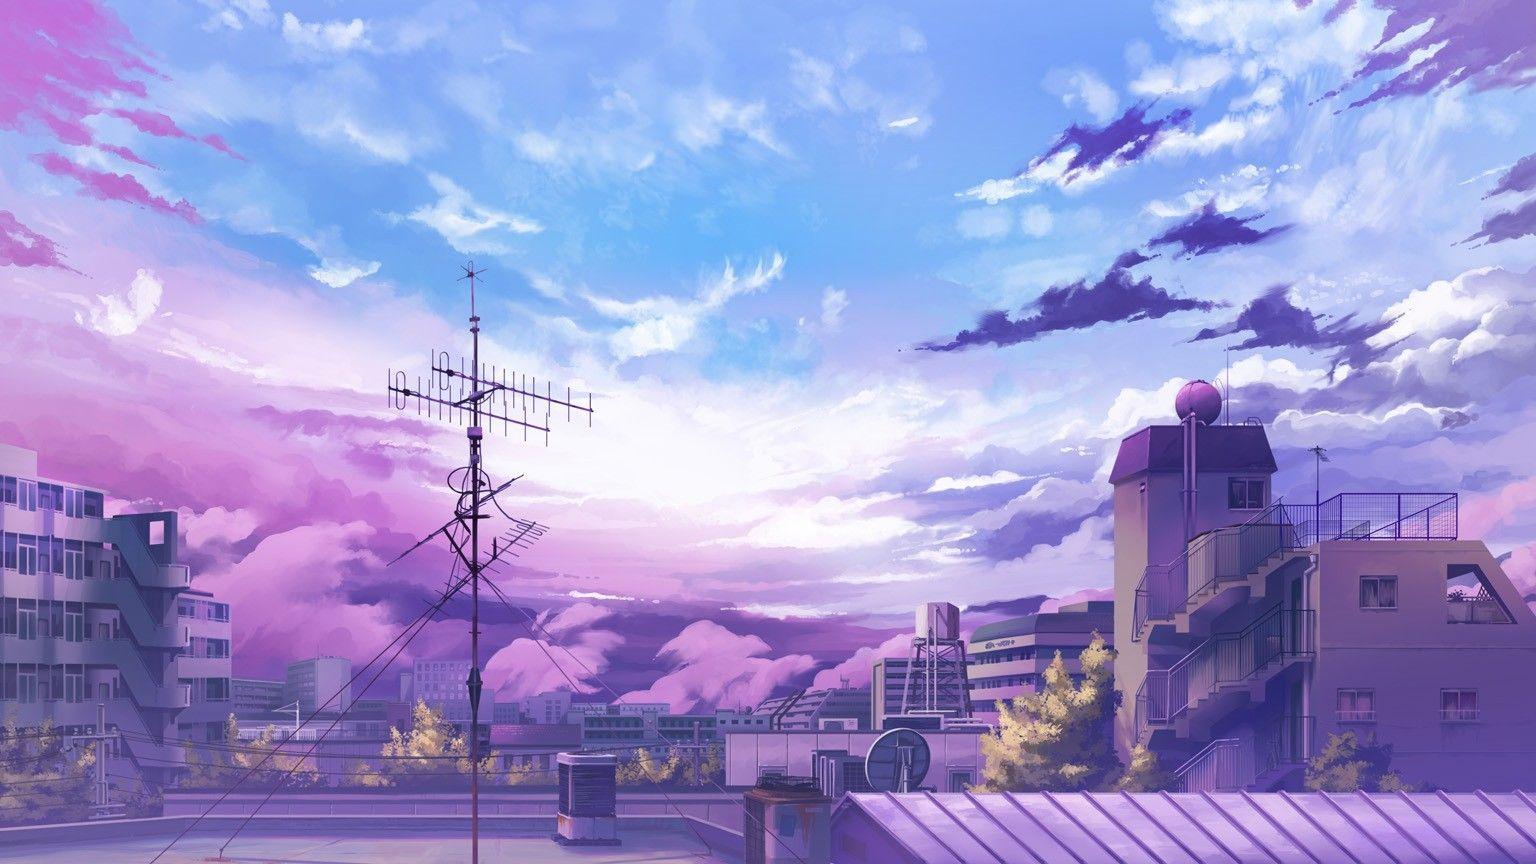 Anime Girl And Colorful Sky Wallpapers